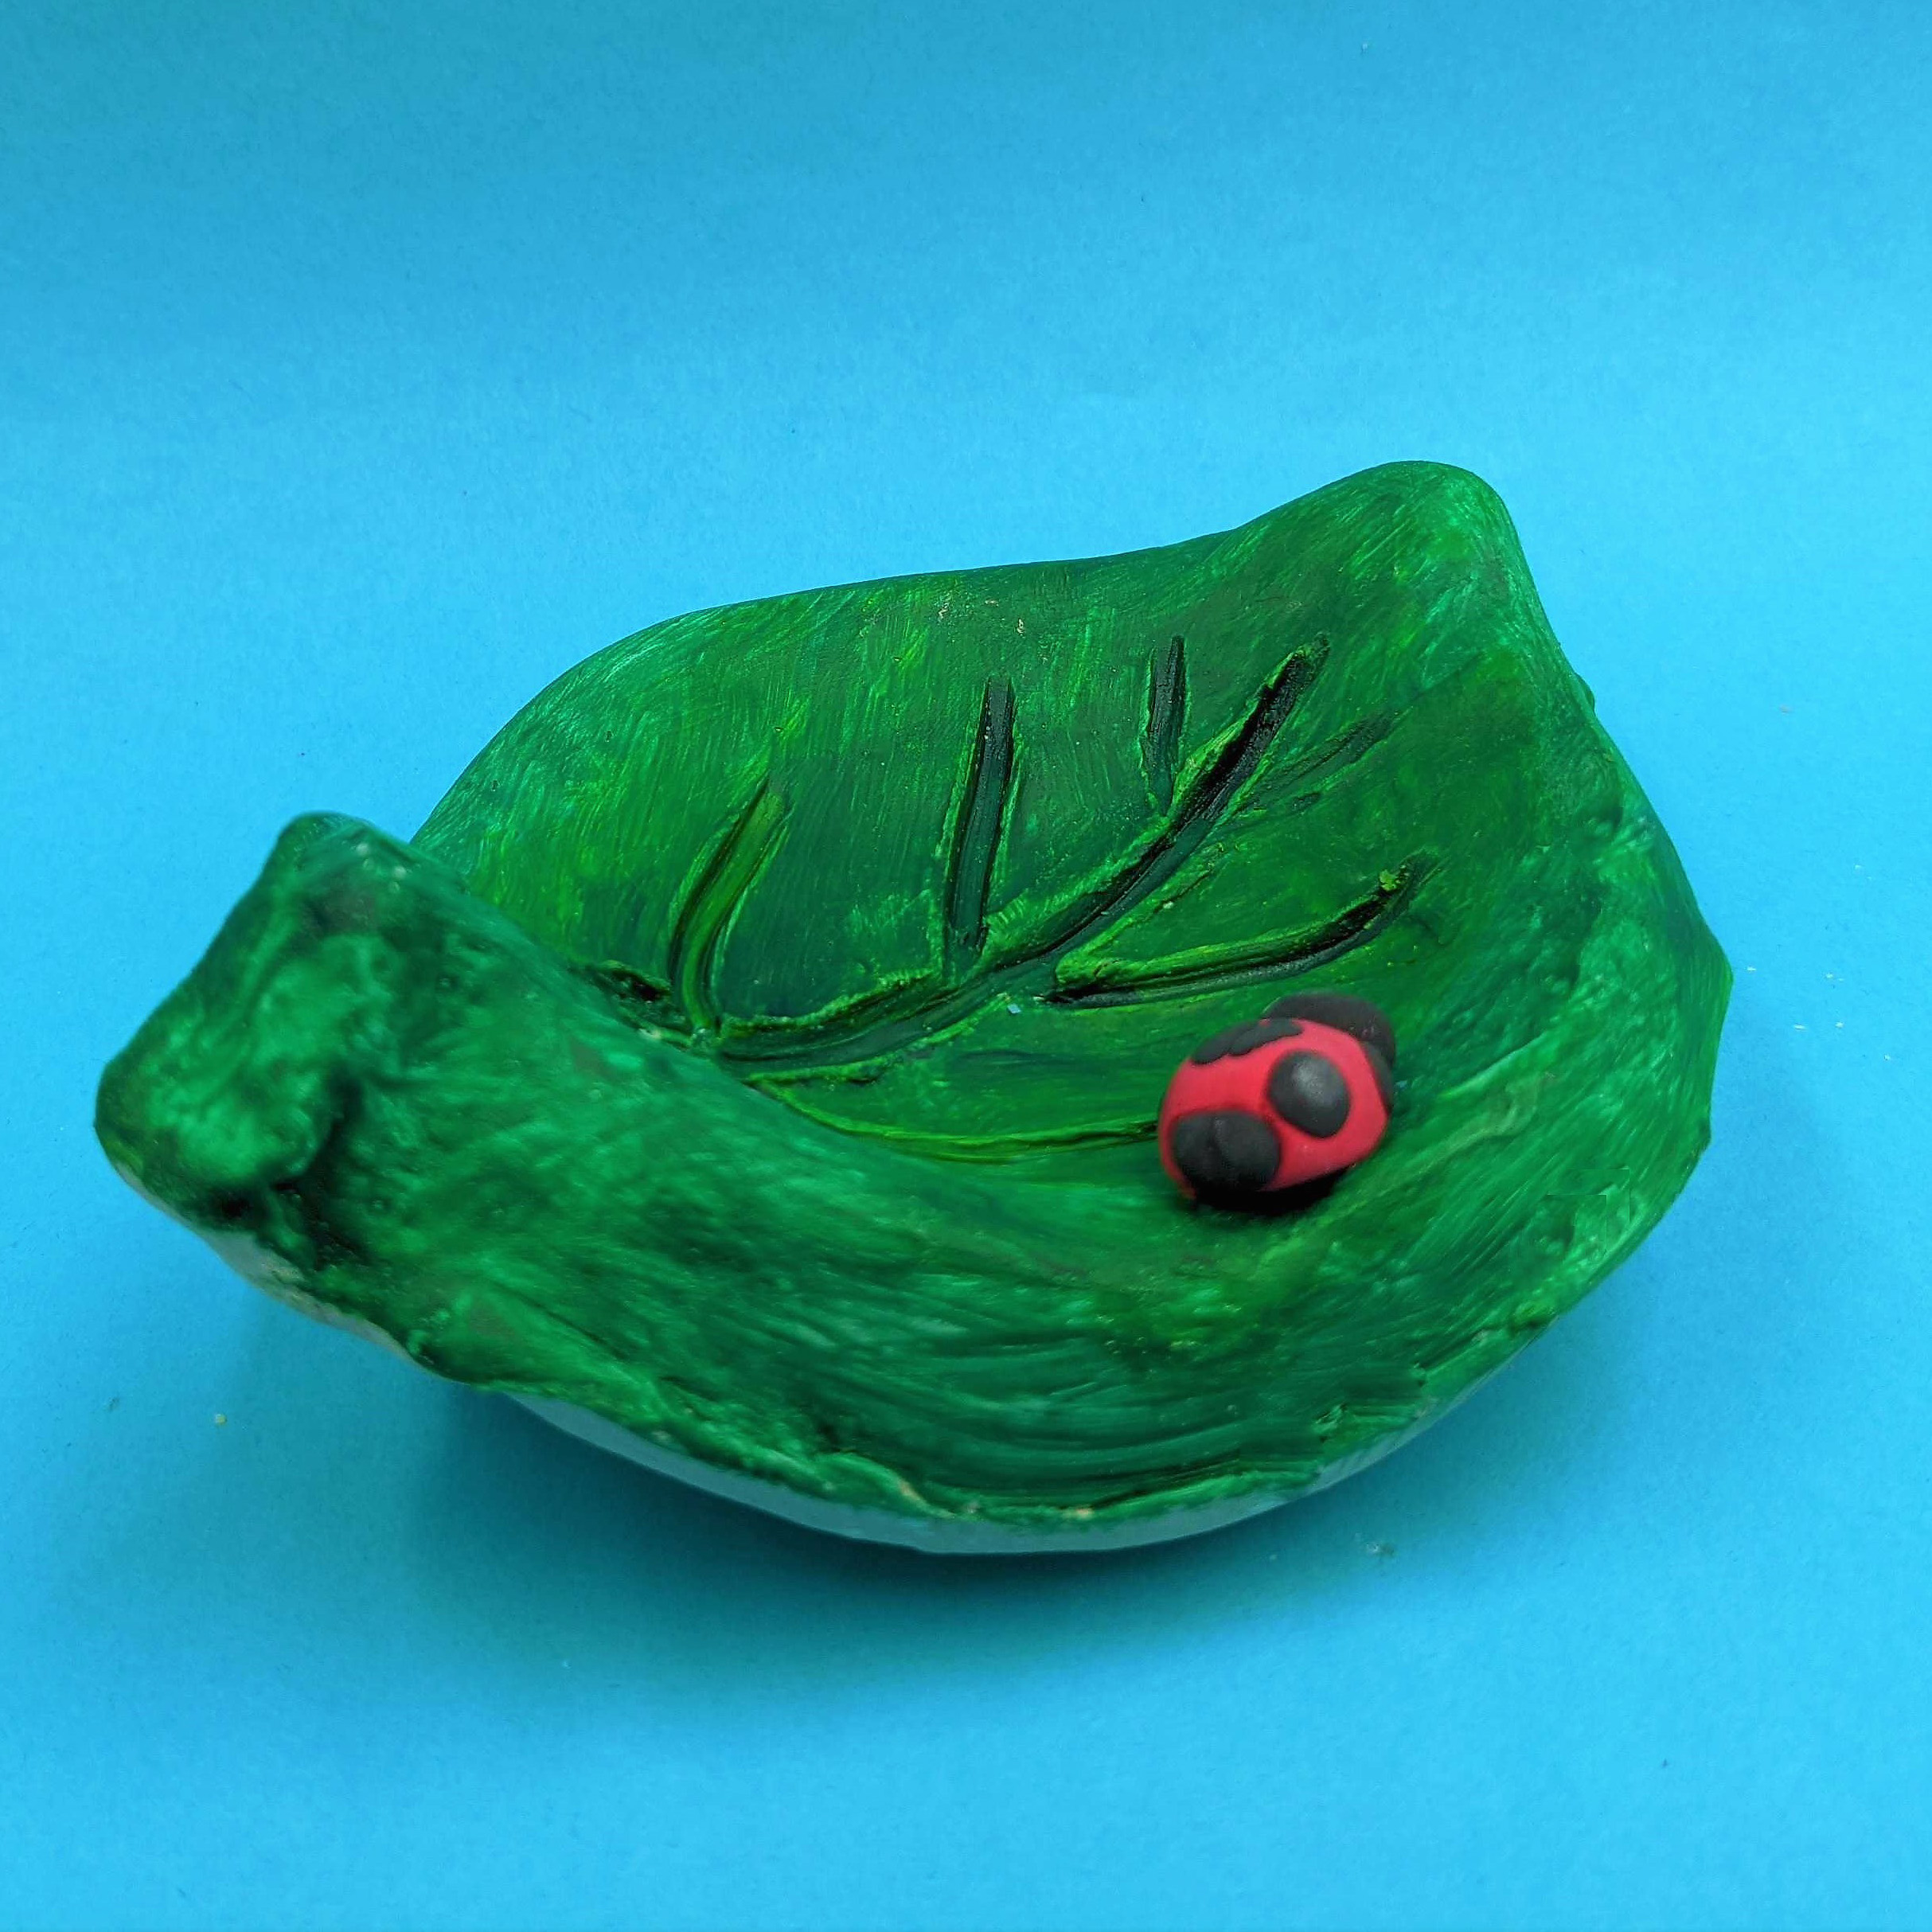 Kidcreate Studio - Johns Creek, Leaf bowl Art Project